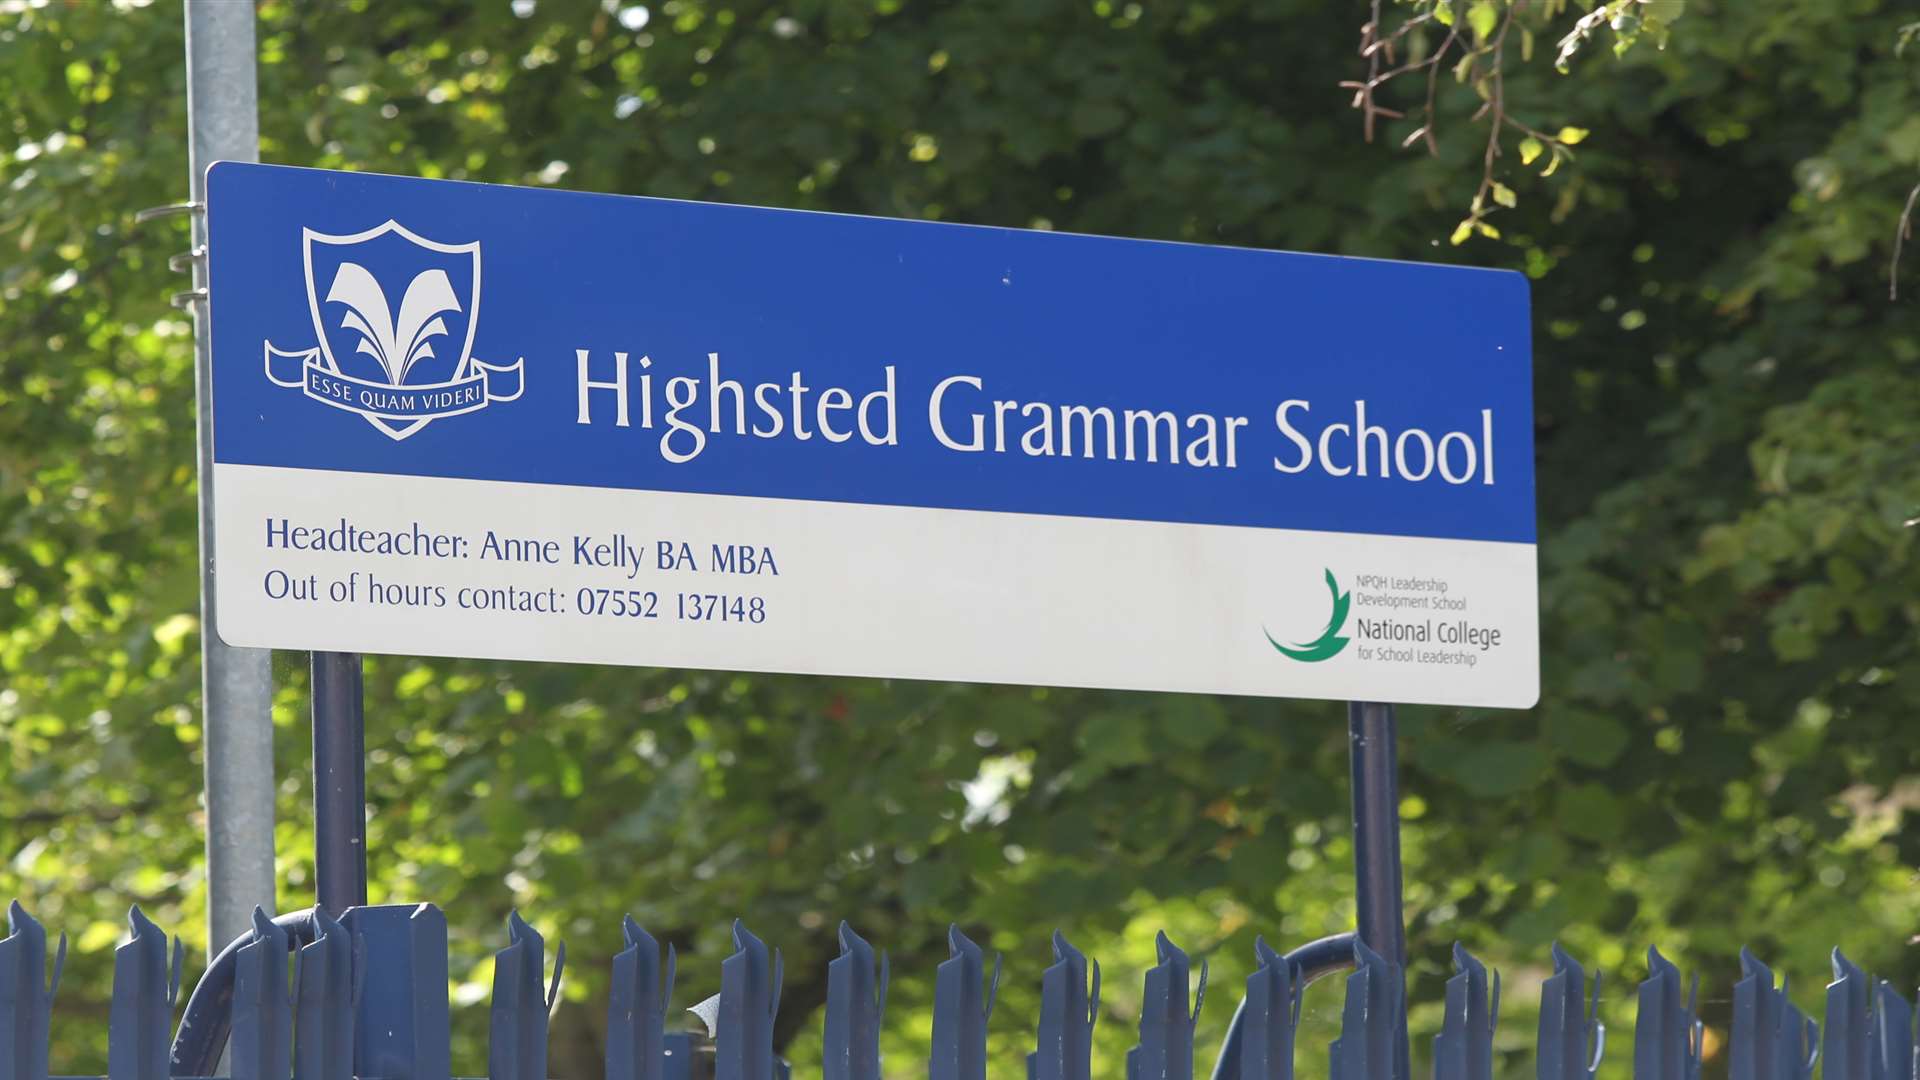 Highsted Grammar School